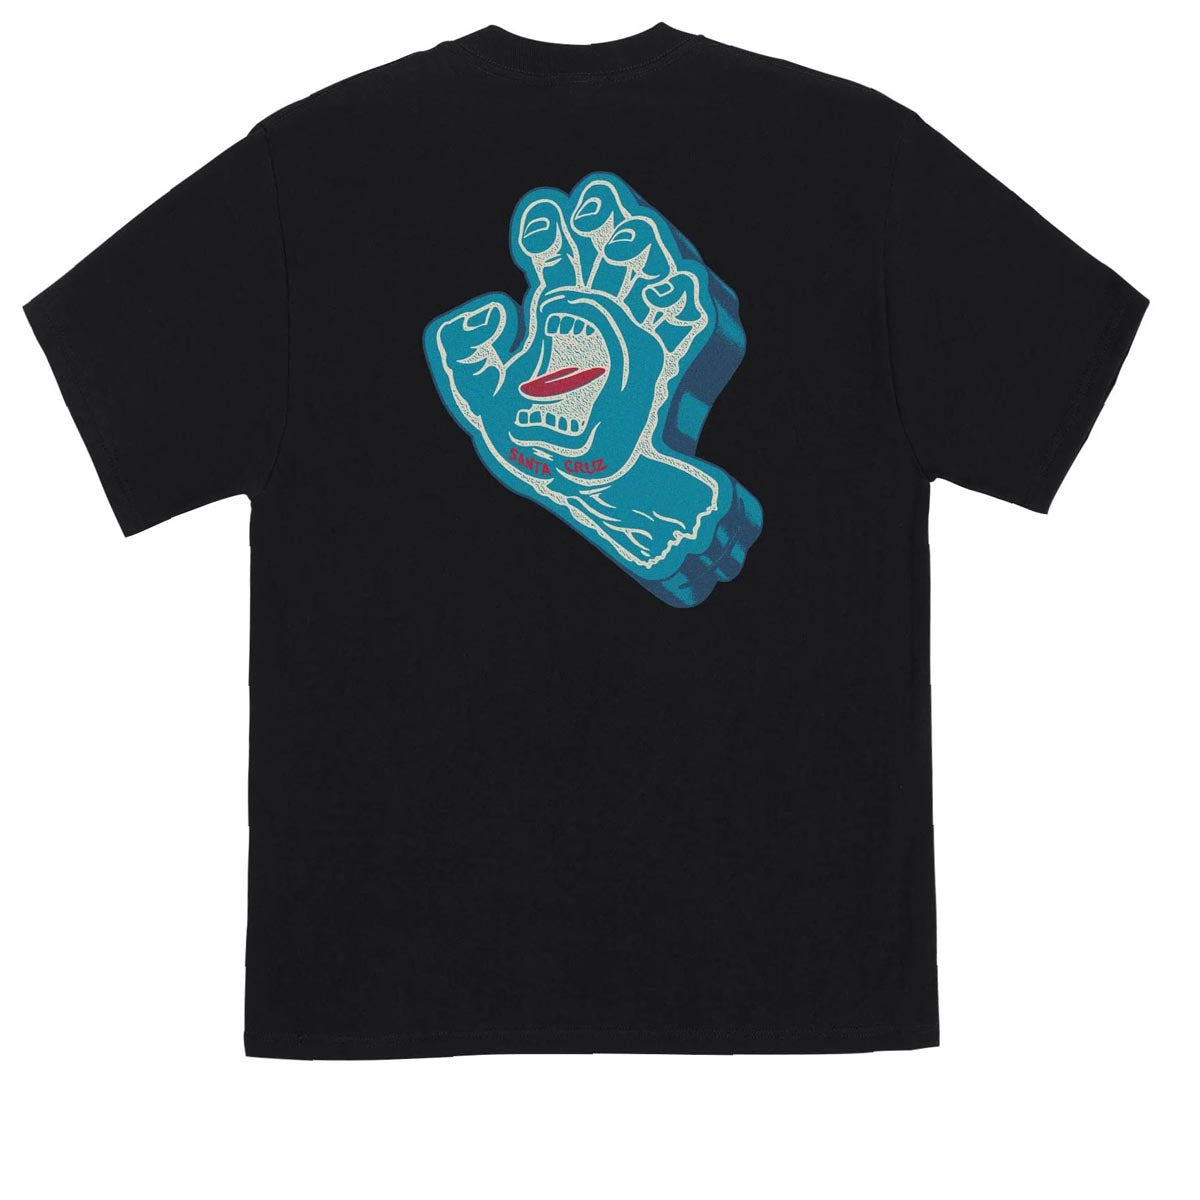 Santa Cruz Screaming Foam Hand T-Shirt - Black image 1